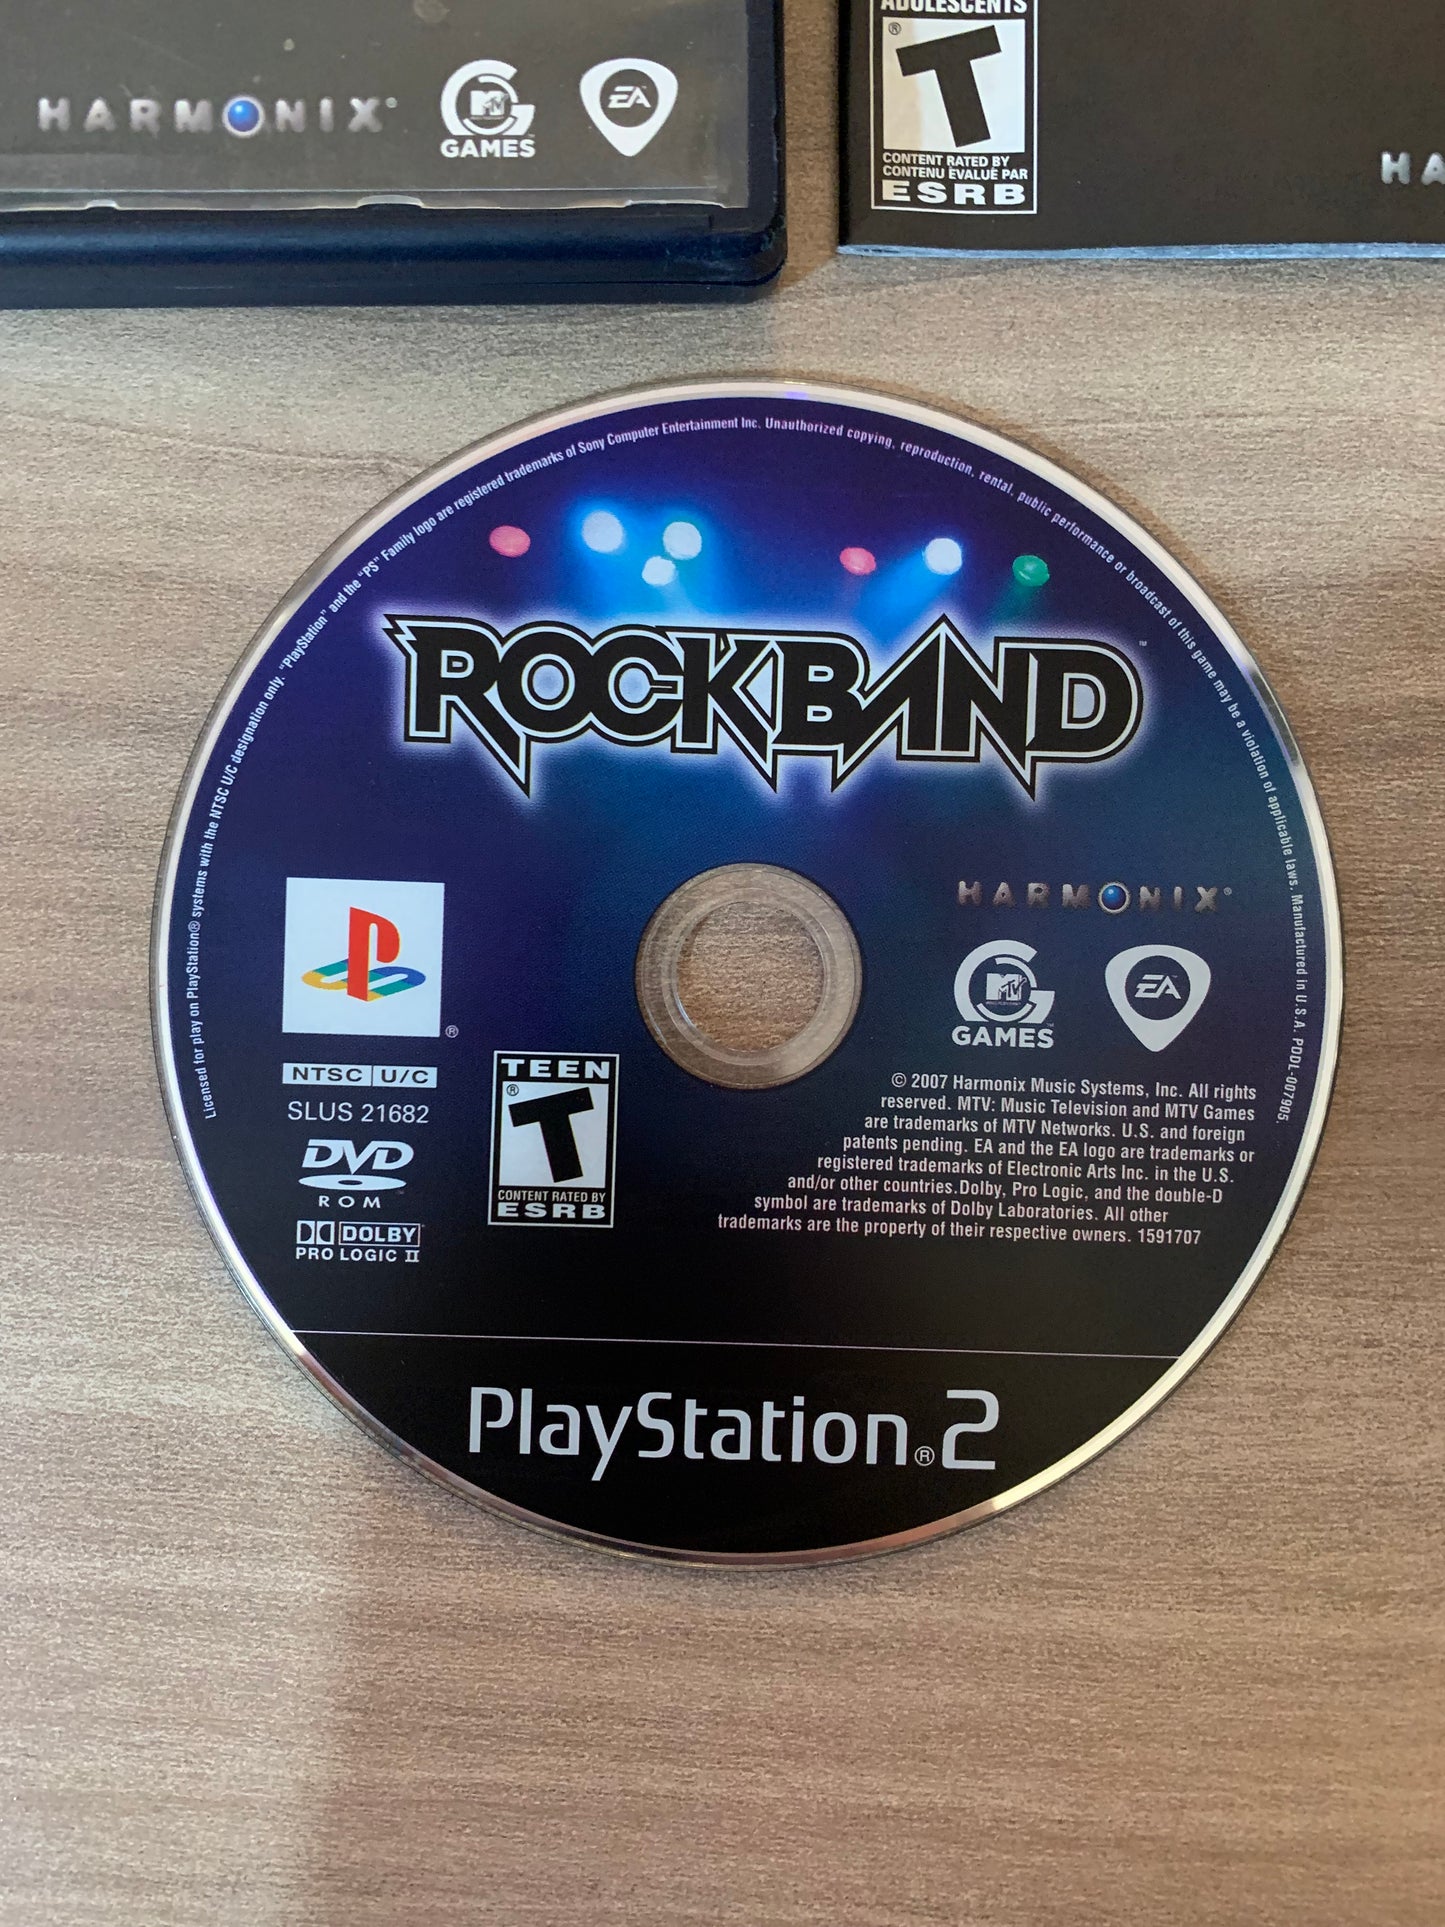 SONY PLAYSTATiON 2 [PS2] | ROCK BAND